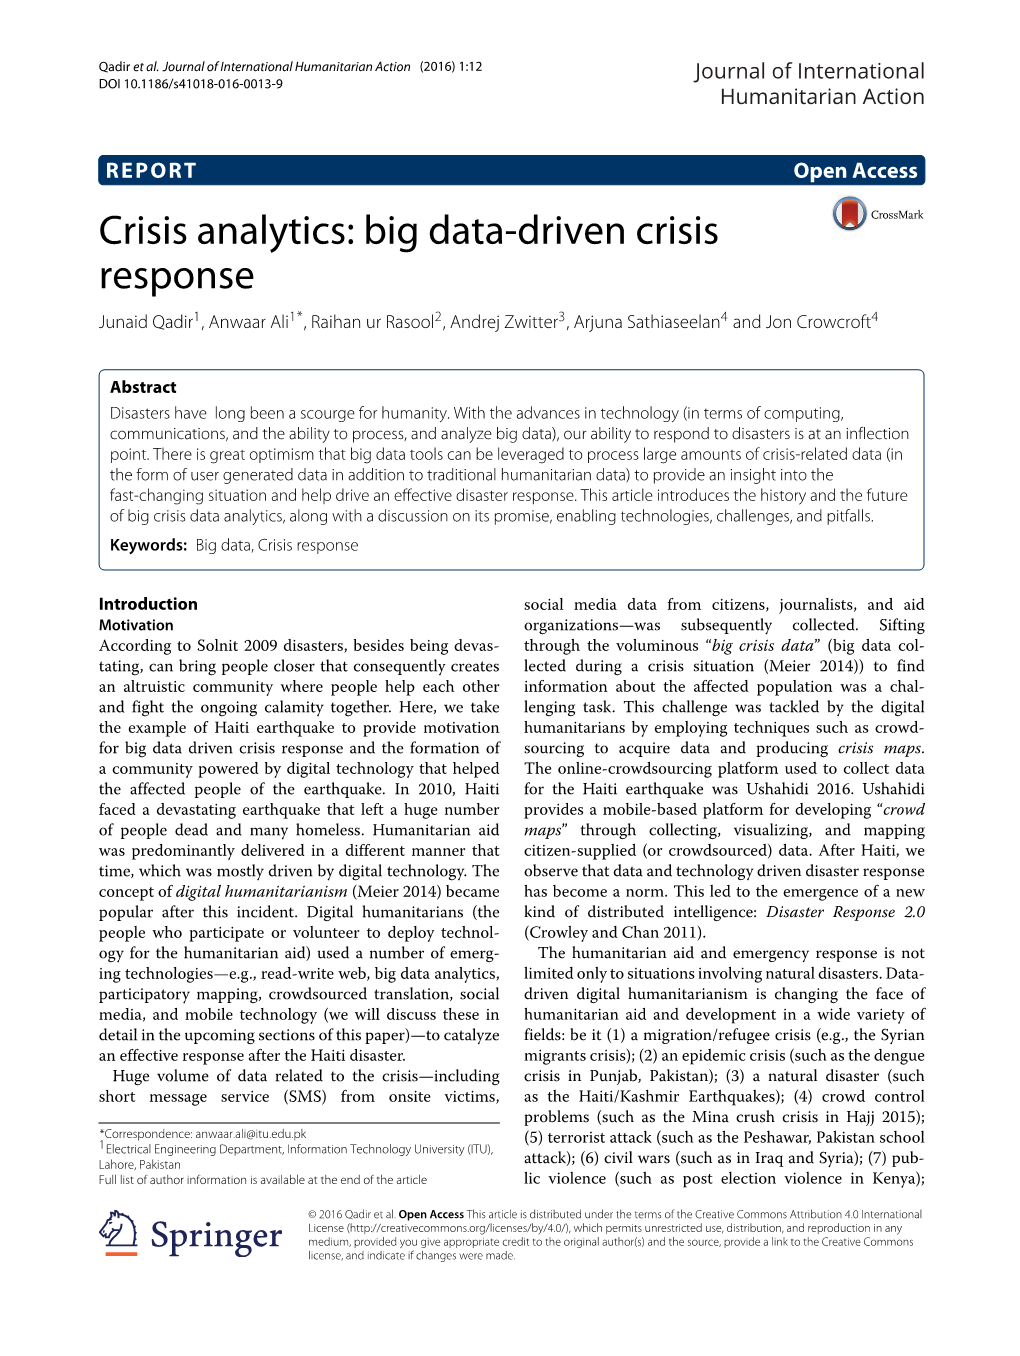 Crisis Analytics: Big Data-Driven Crisis Response Junaid Qadir1, Anwaar Ali1*, Raihan Ur Rasool2, Andrej Zwitter3, Arjuna Sathiaseelan4 and Jon Crowcroft4